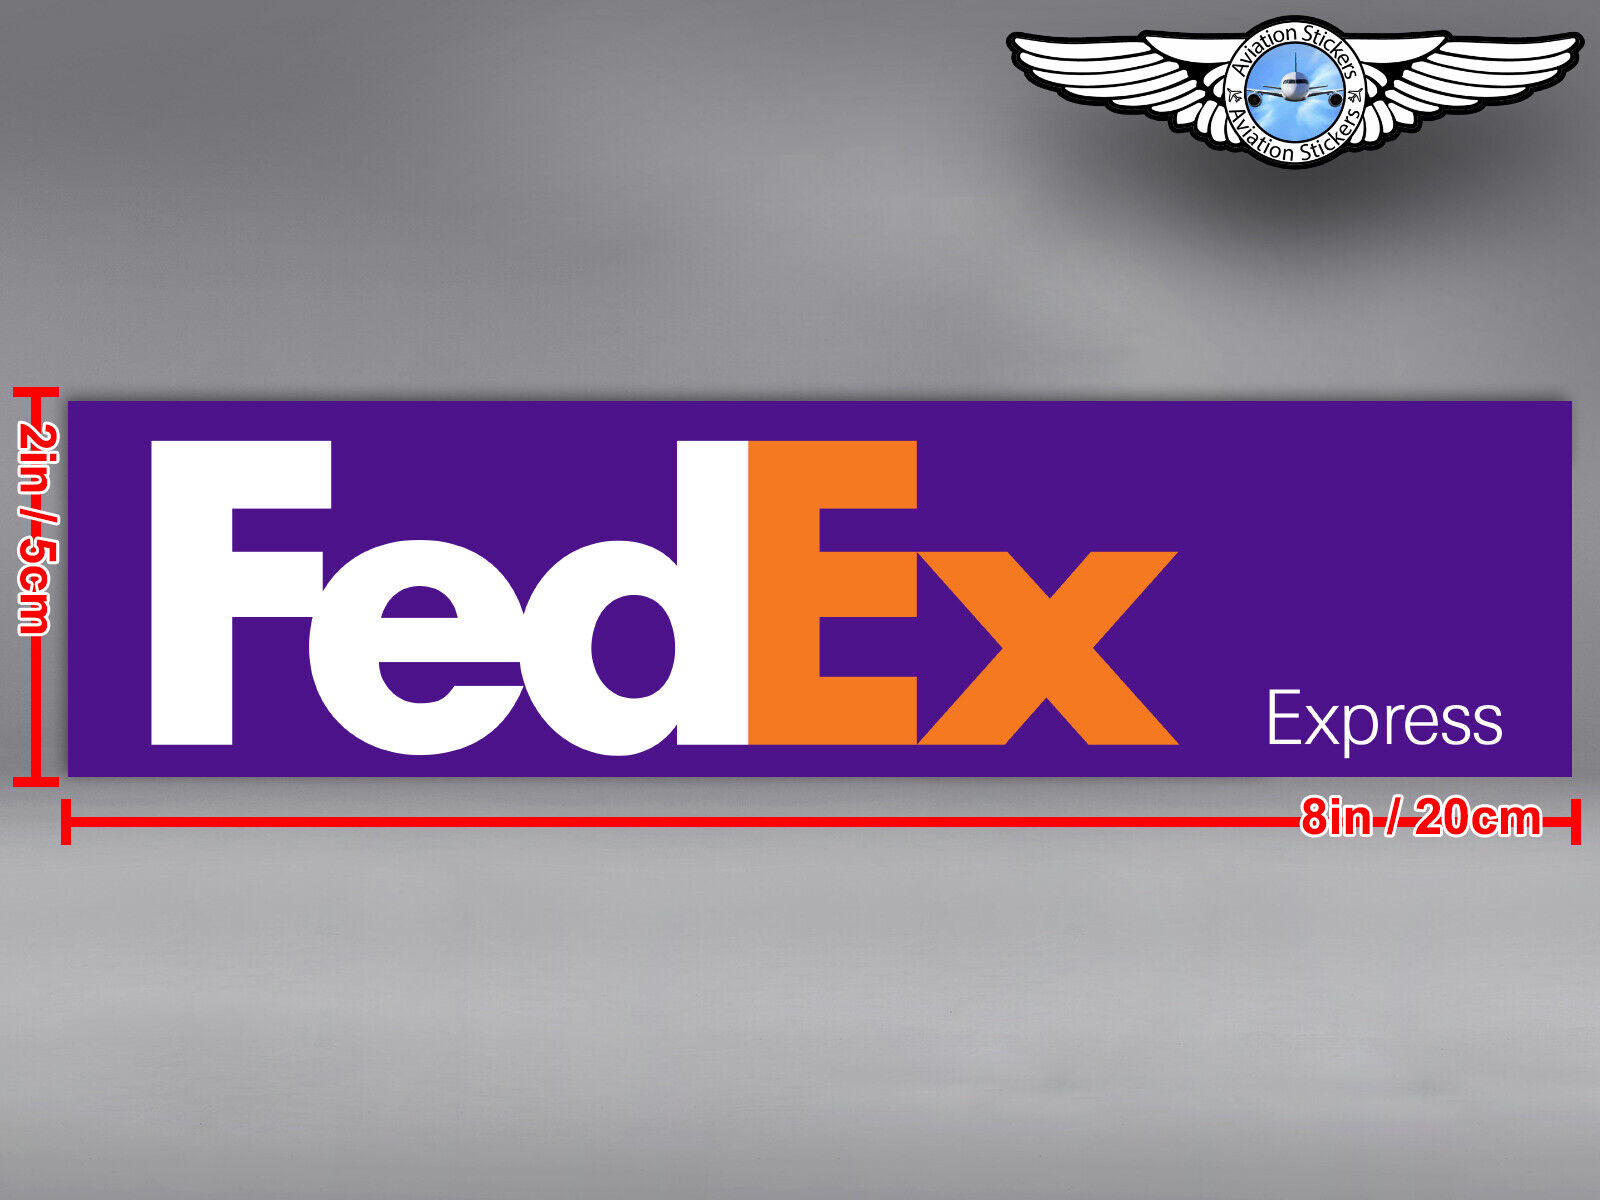 FED EX FEDEX EXPRESS LOGO RECTANGULAR DECAL / STICKER